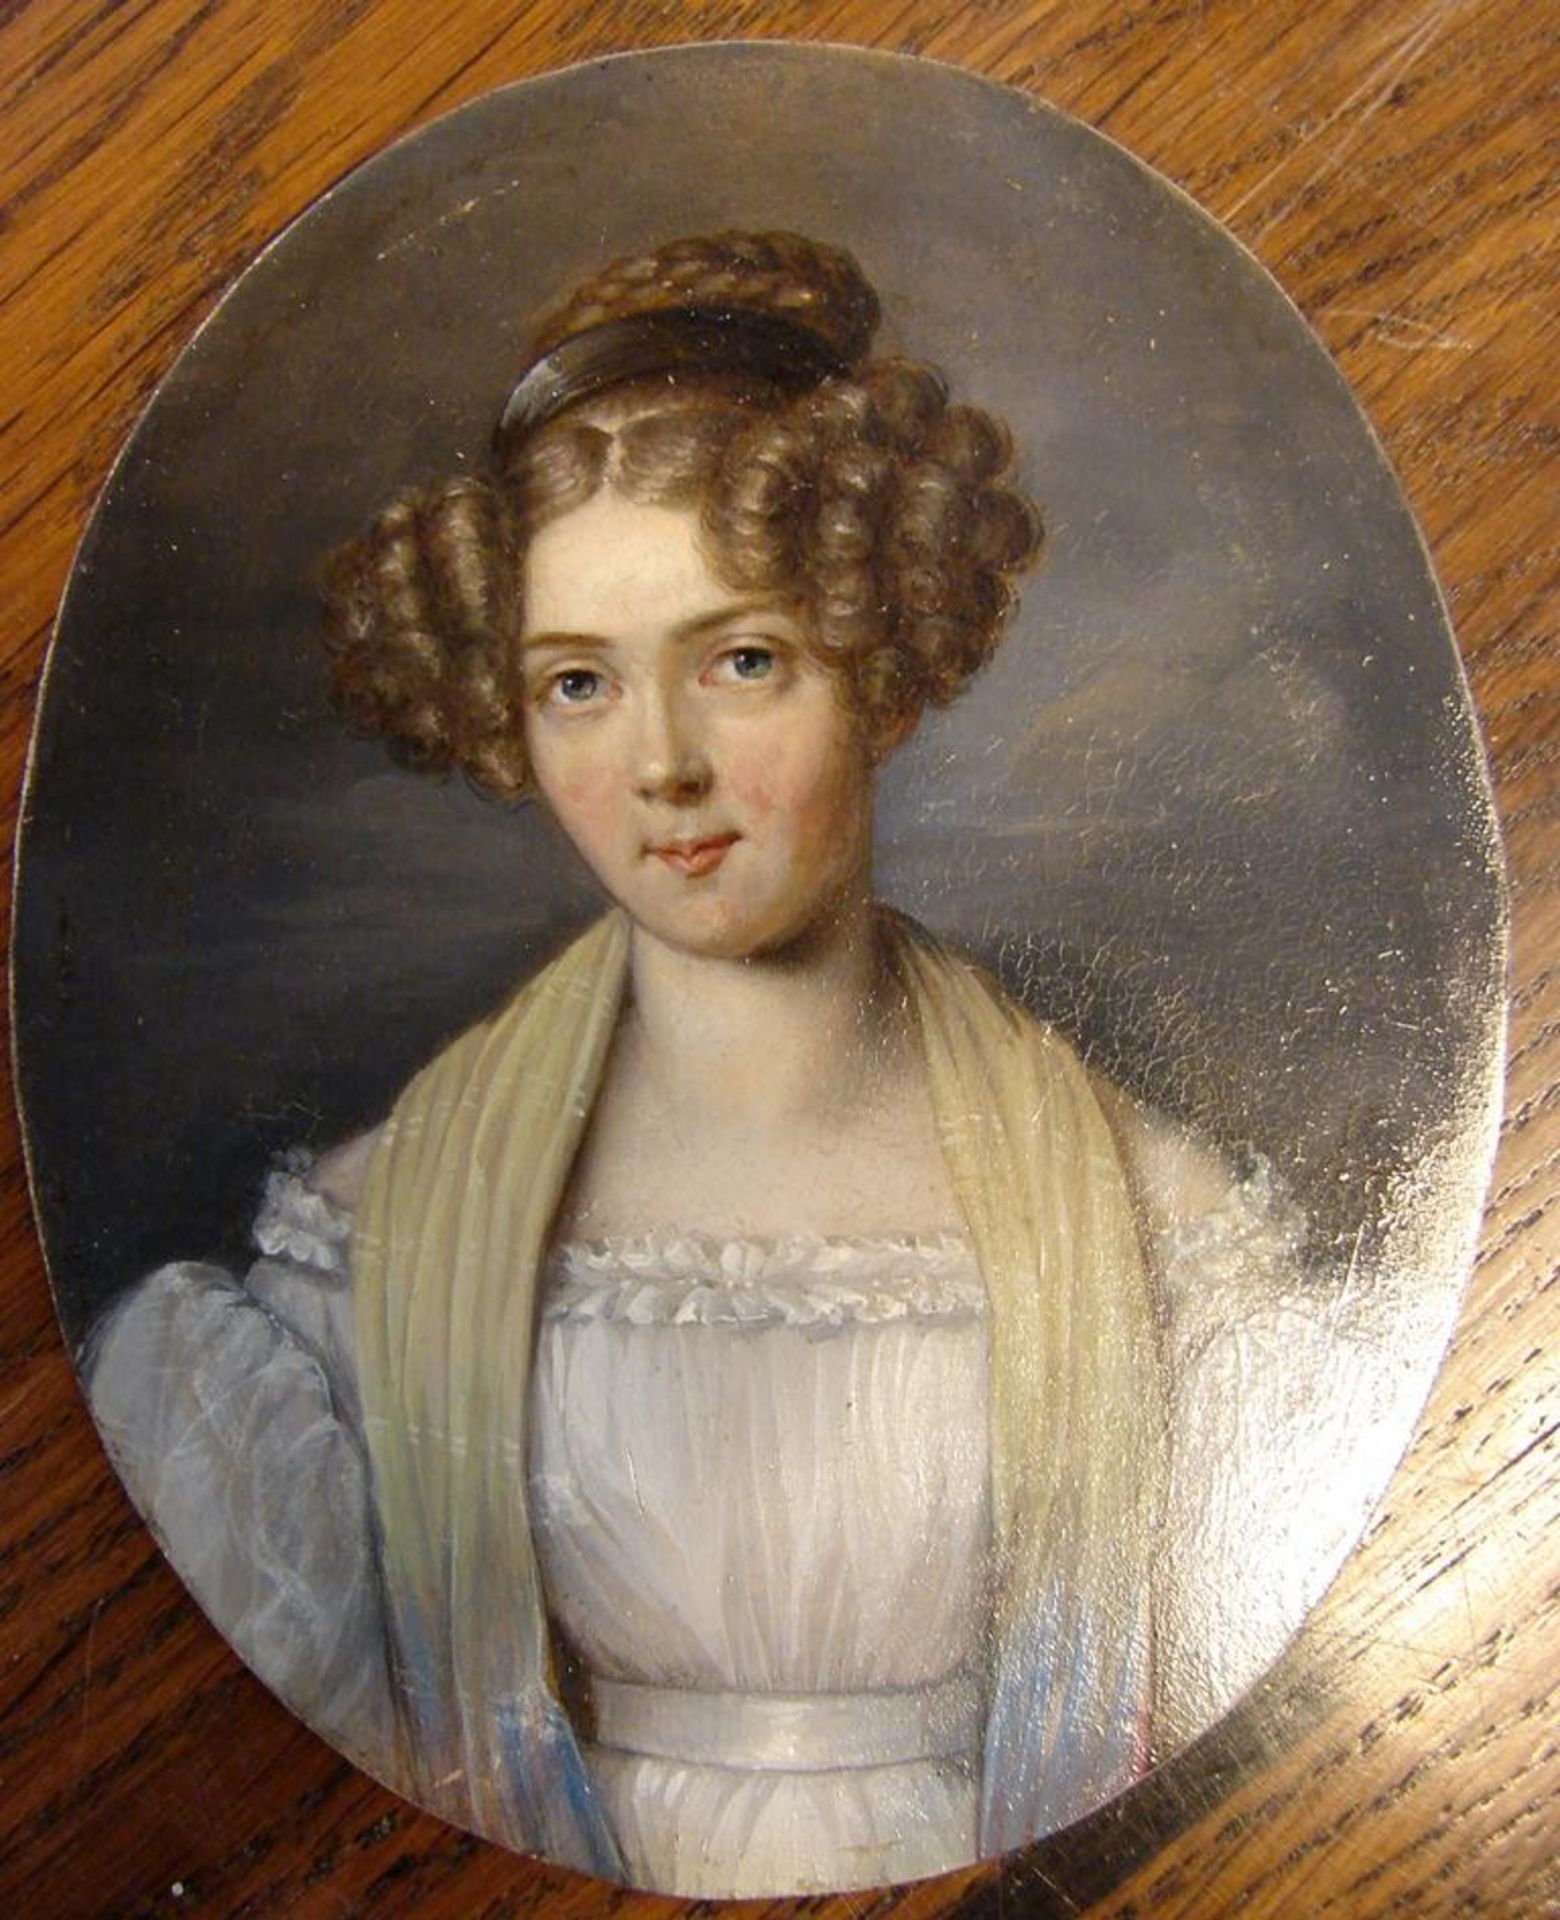 Portrait, Miniatur, Öl/Metallplatte, oval, mittig re. bez. HL, 1830, ca. 9x12 cm